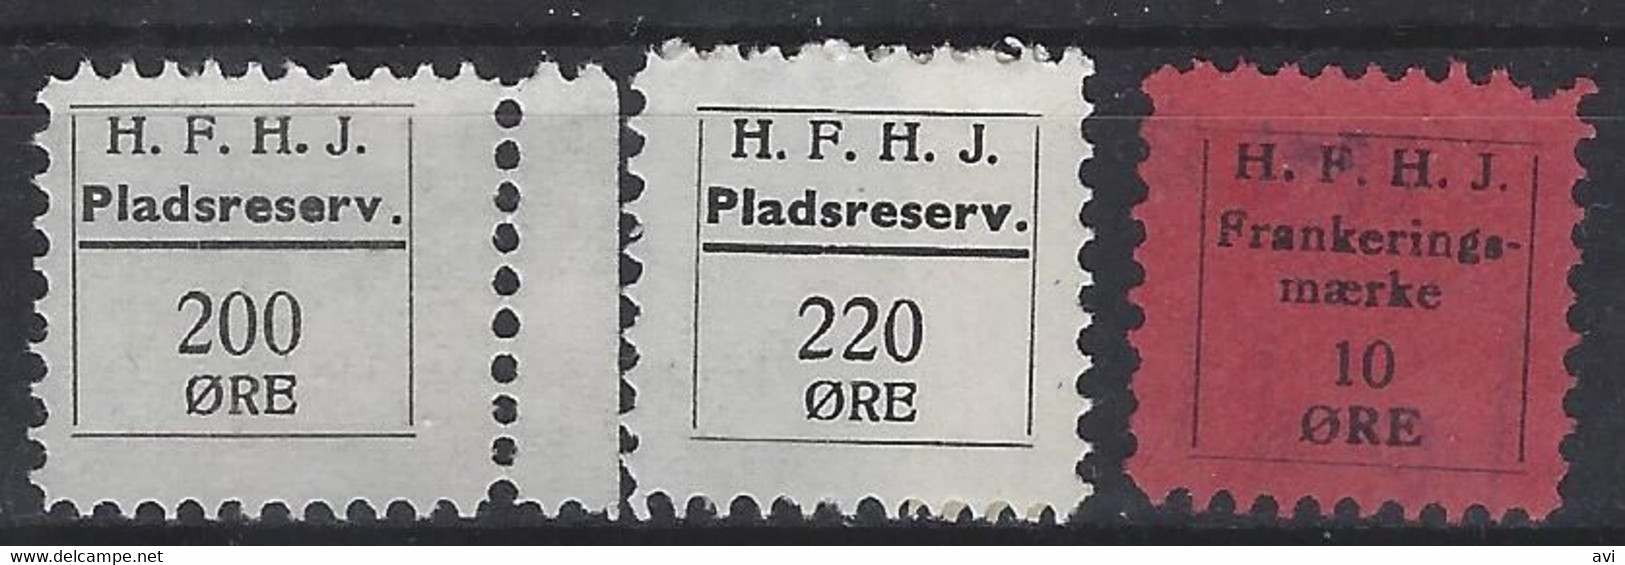 Denmark Local Railway Parcel Post,H.F.H.J.3 Stamps .Trains/Railways/Eisenbahnmarken - Revenue Stamps